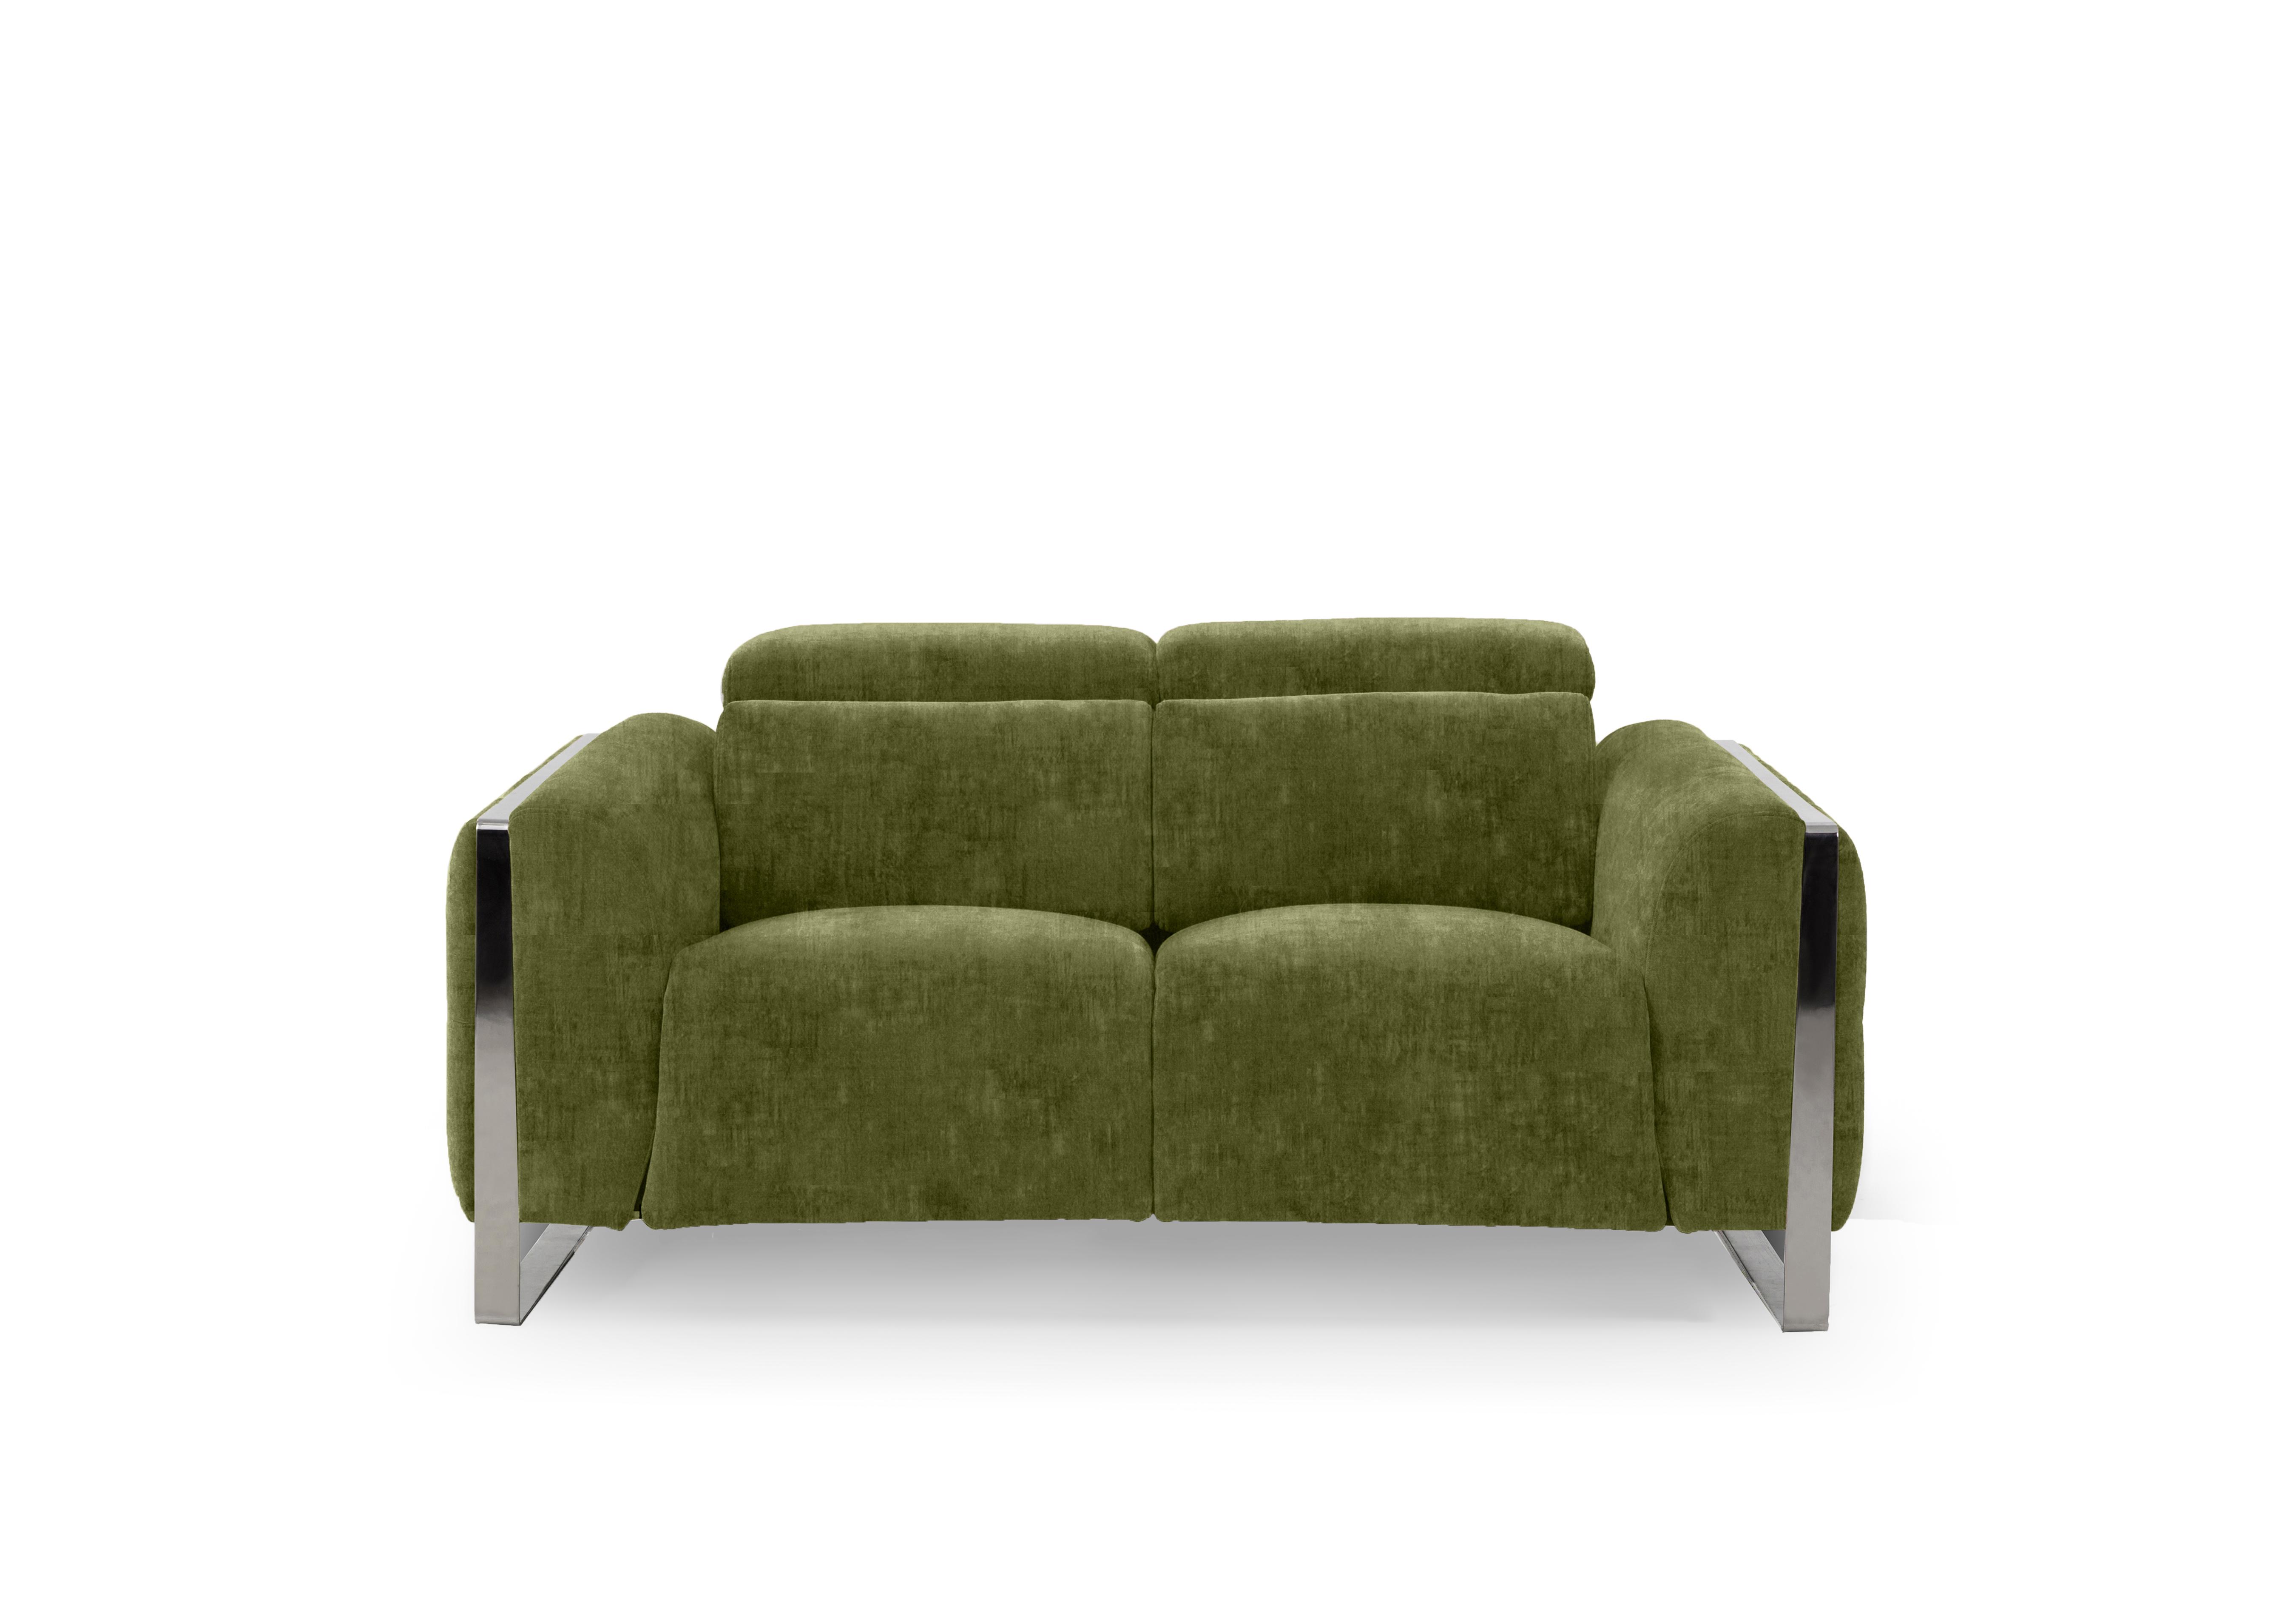 Gisella Fabric 2 Seater Sofa in Heritage Olive 52003 on Furniture Village